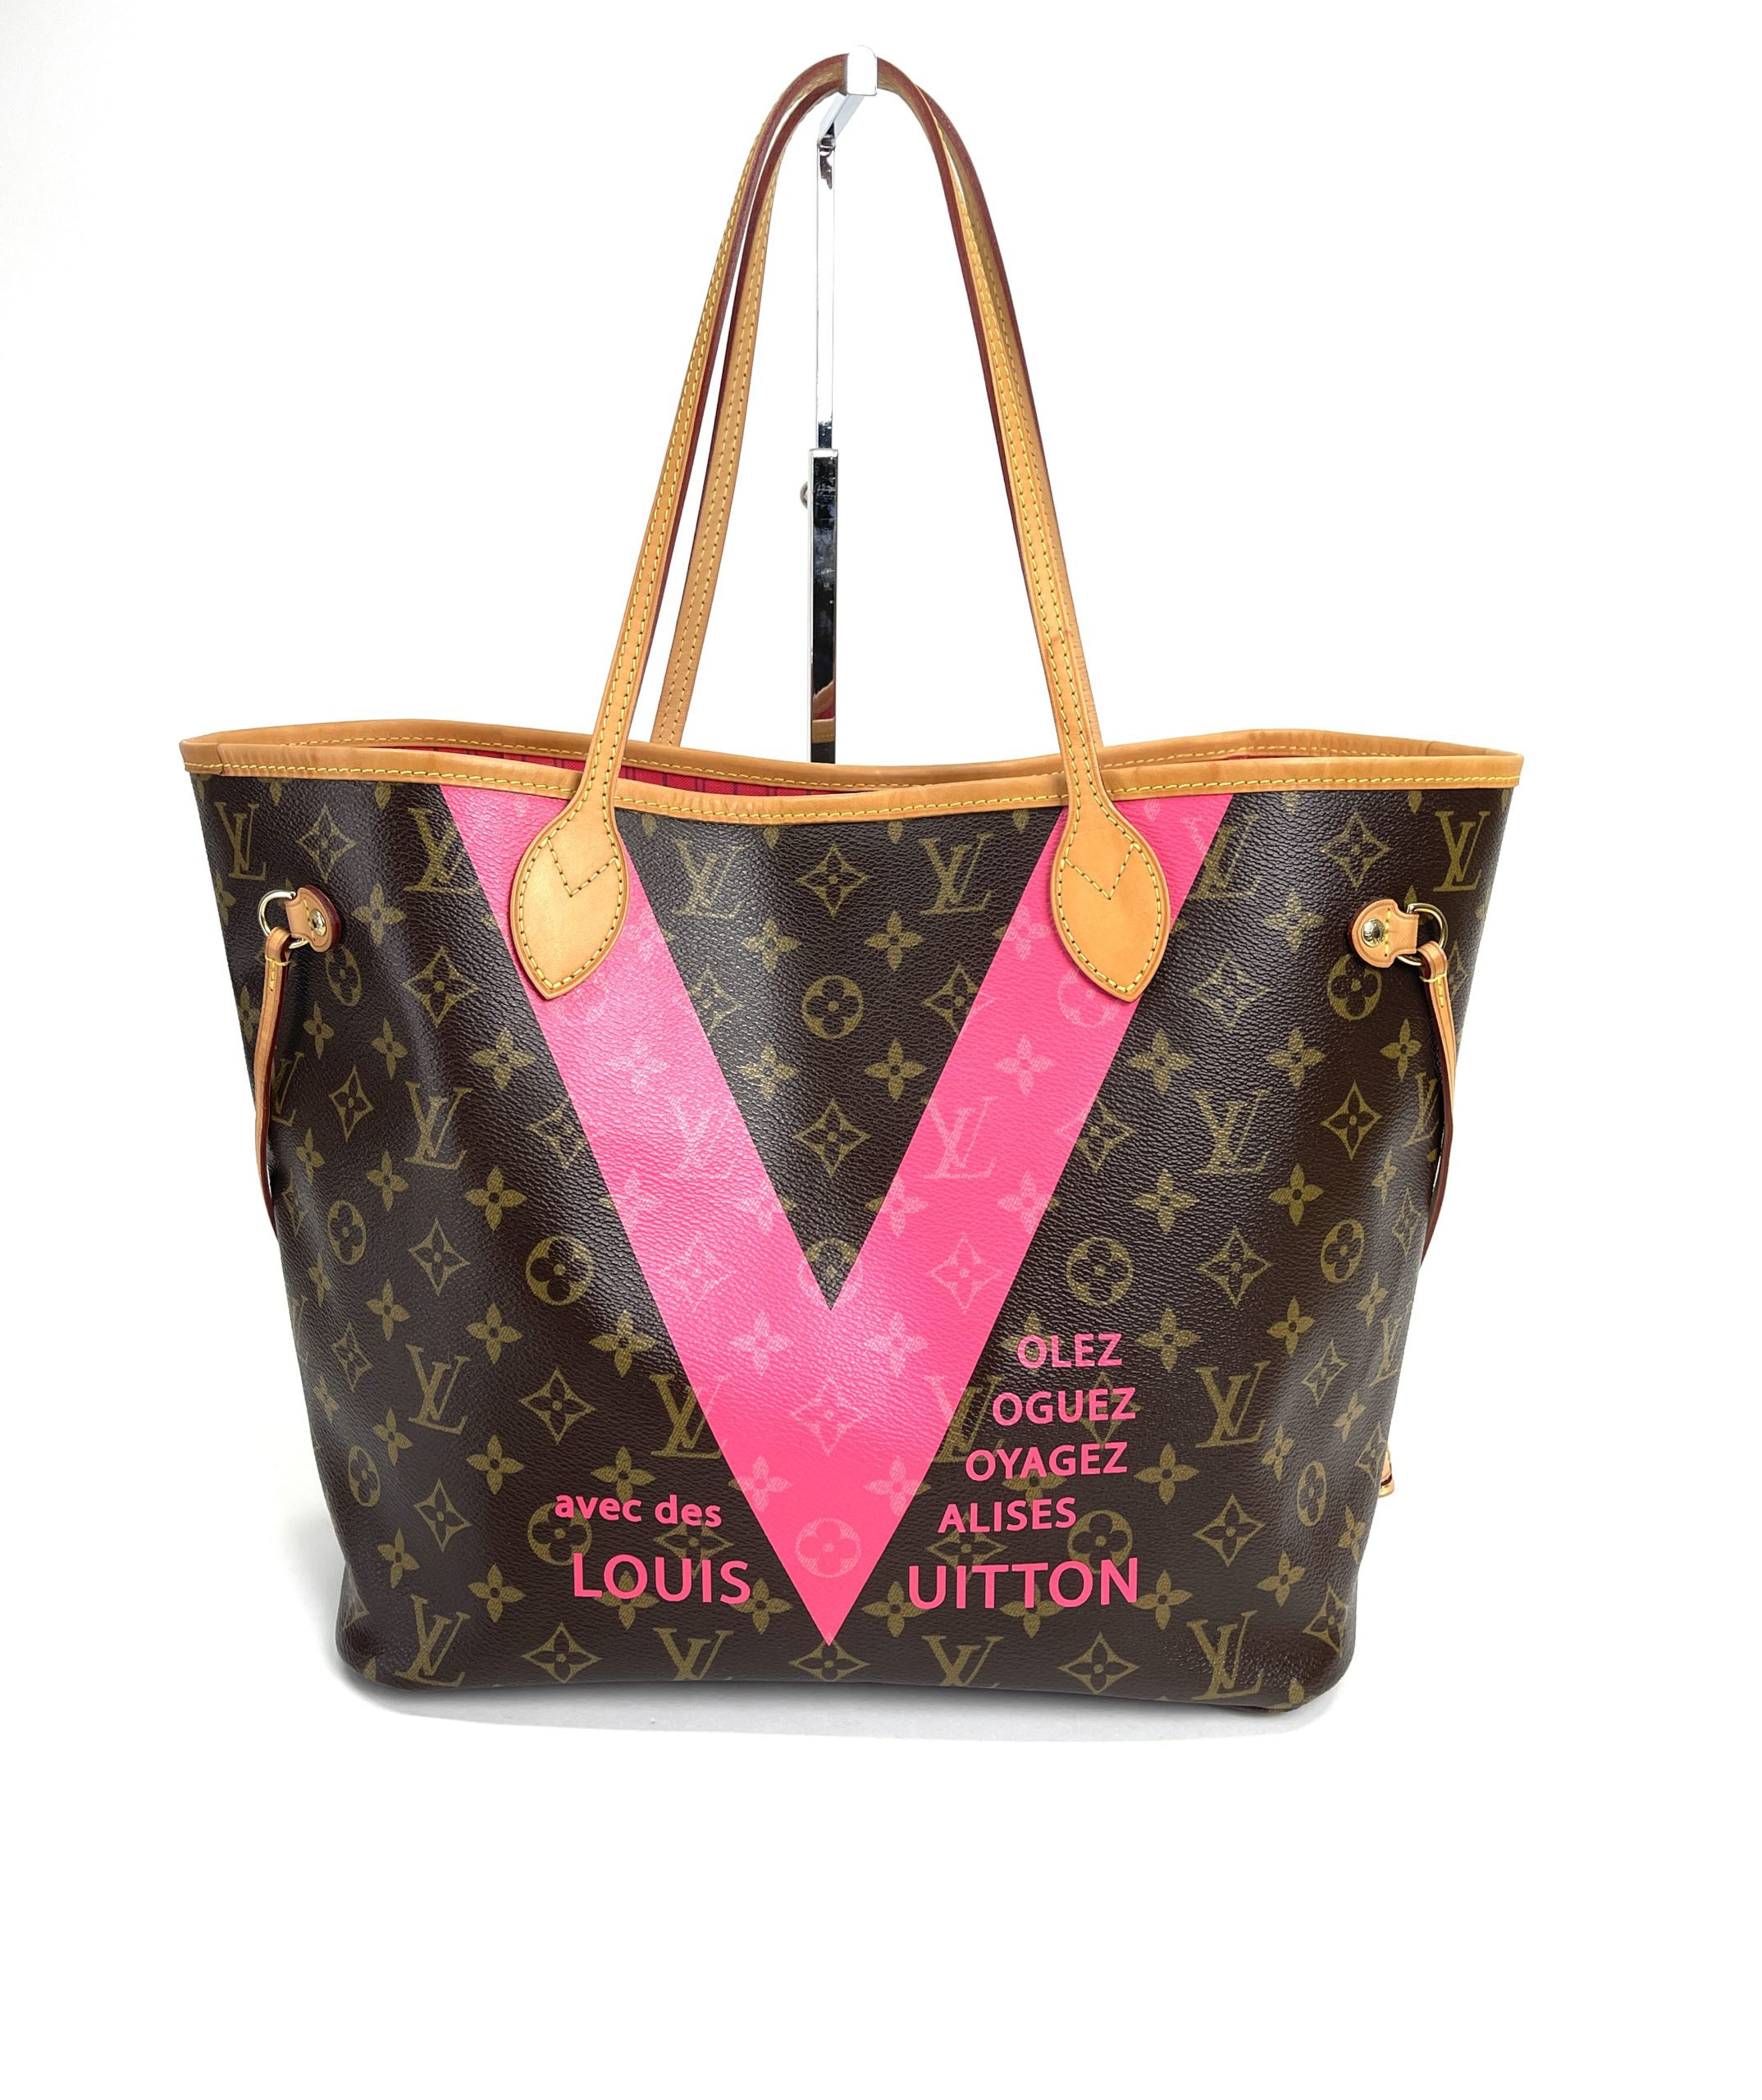 Louis Vuitton Monogram V Tote